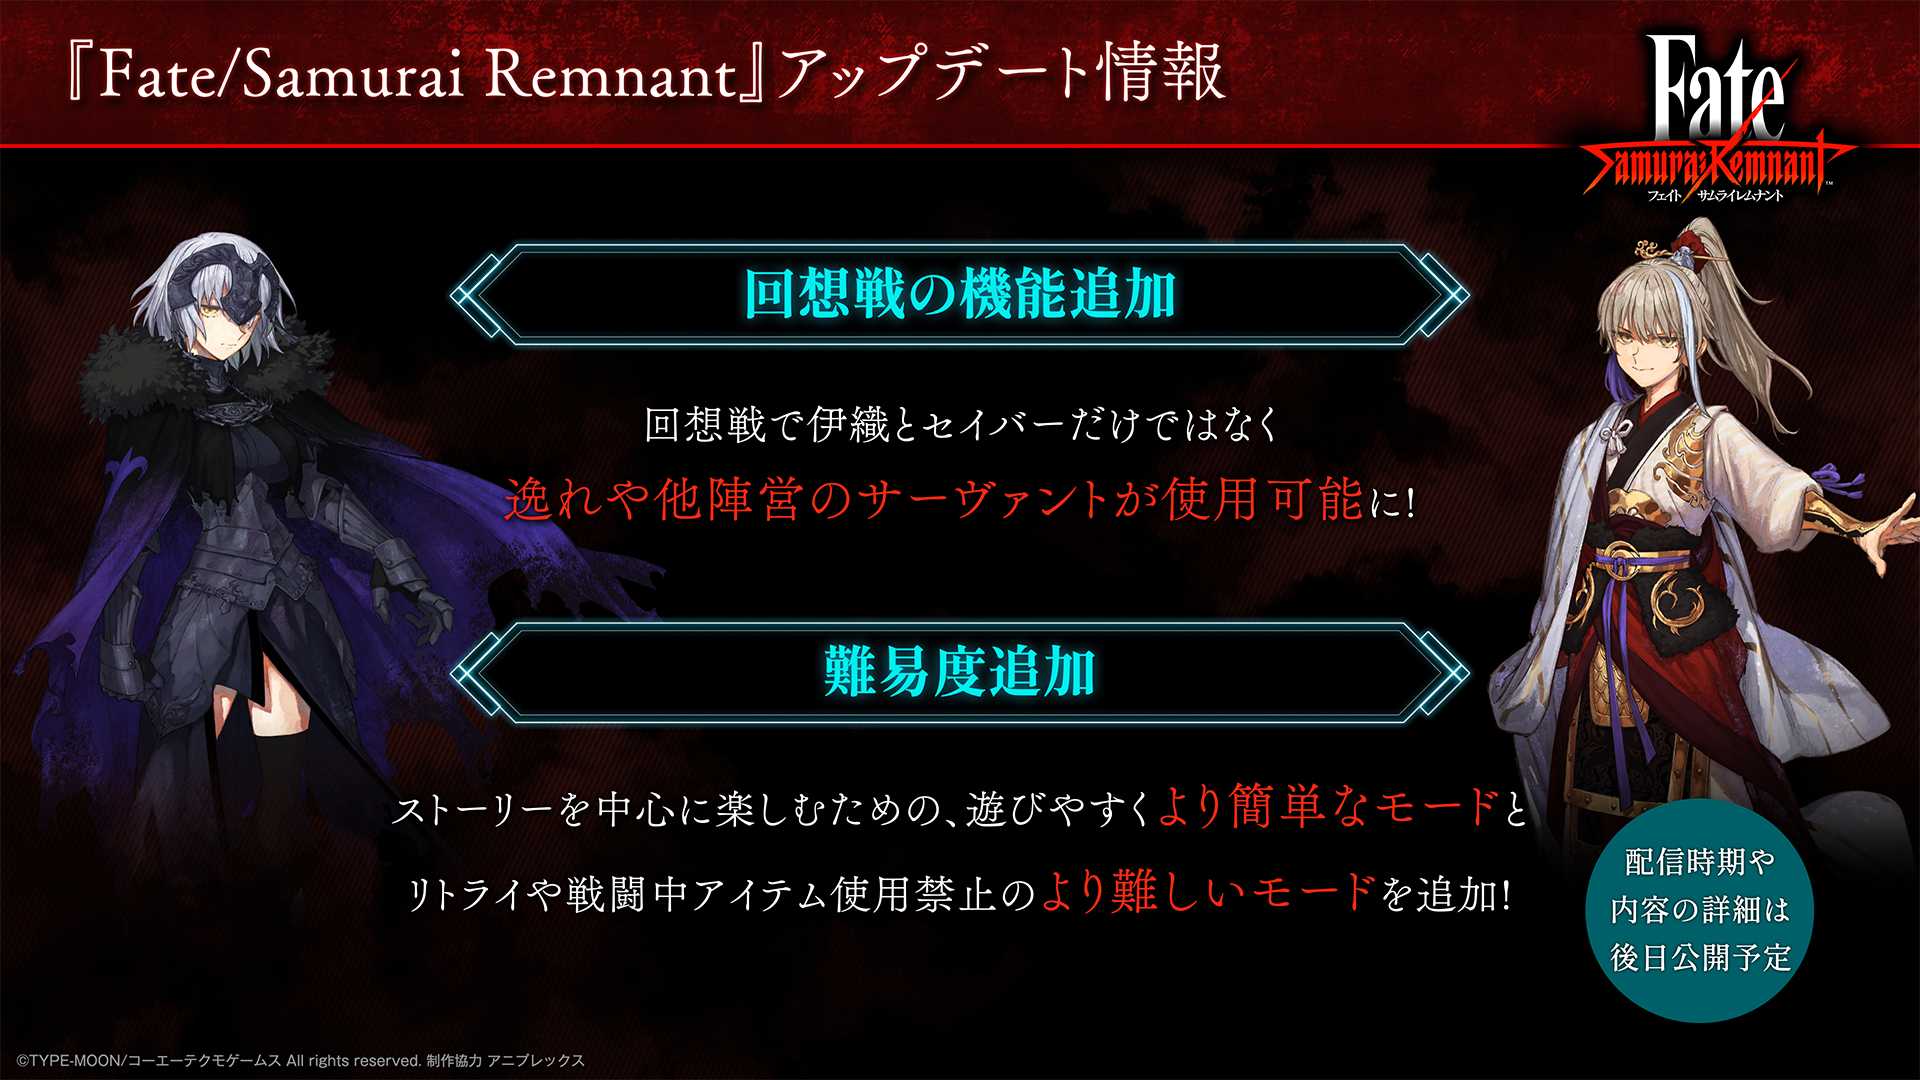 《Fate/Samurai Remnant》将加入更多难度选择及BOSS战模式(fatesaber线)